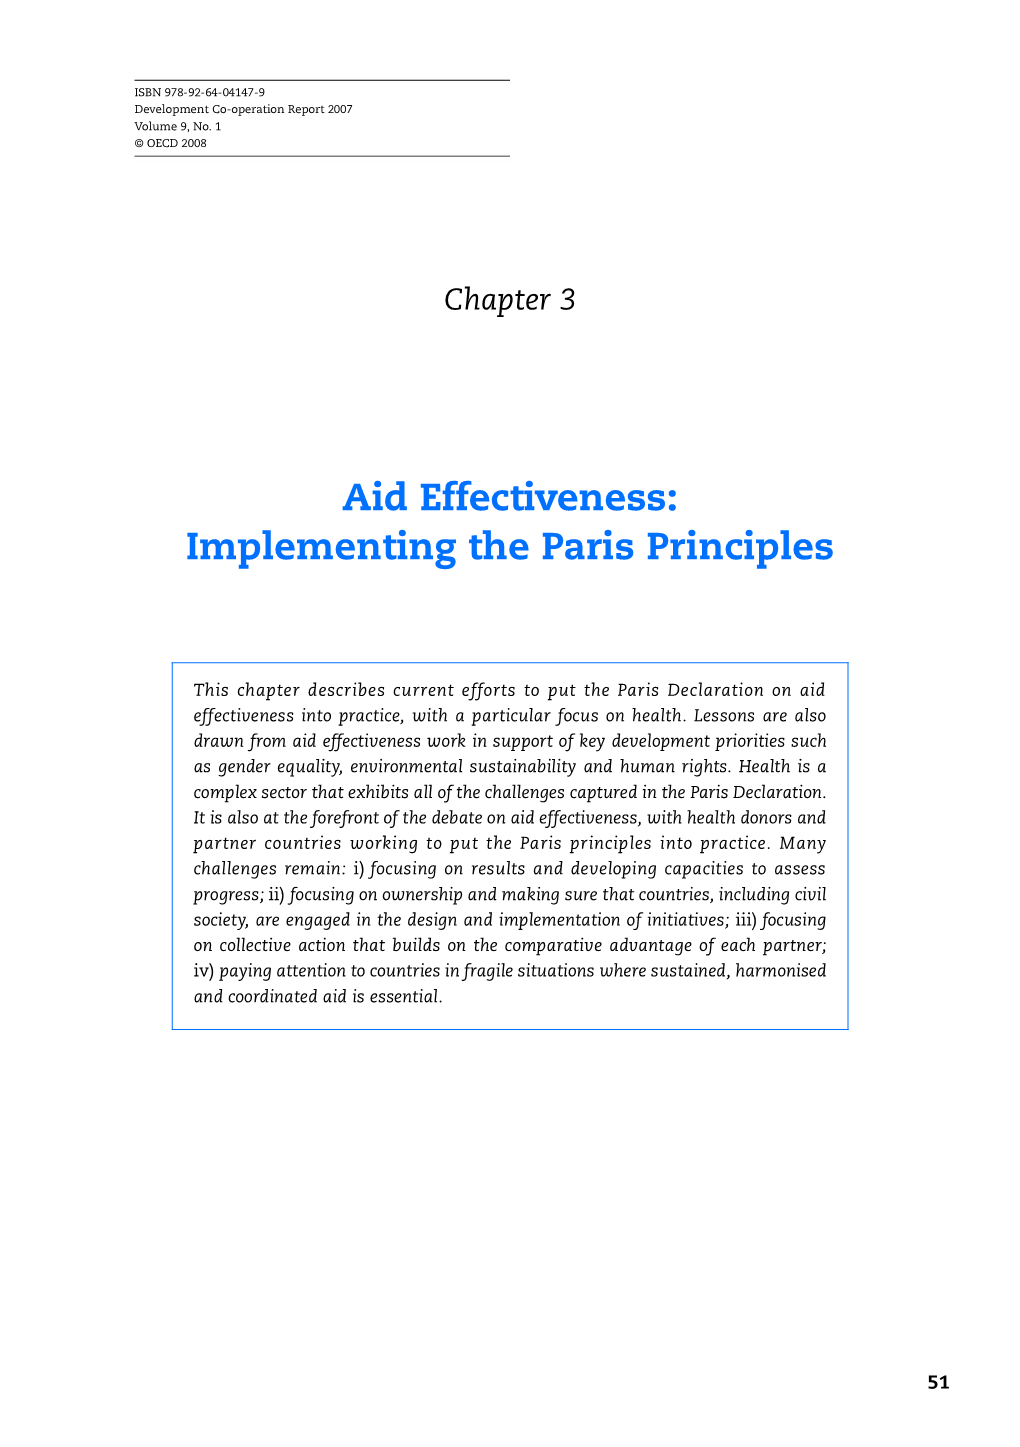 Aid Effectiveness: Implementing the Paris Principles